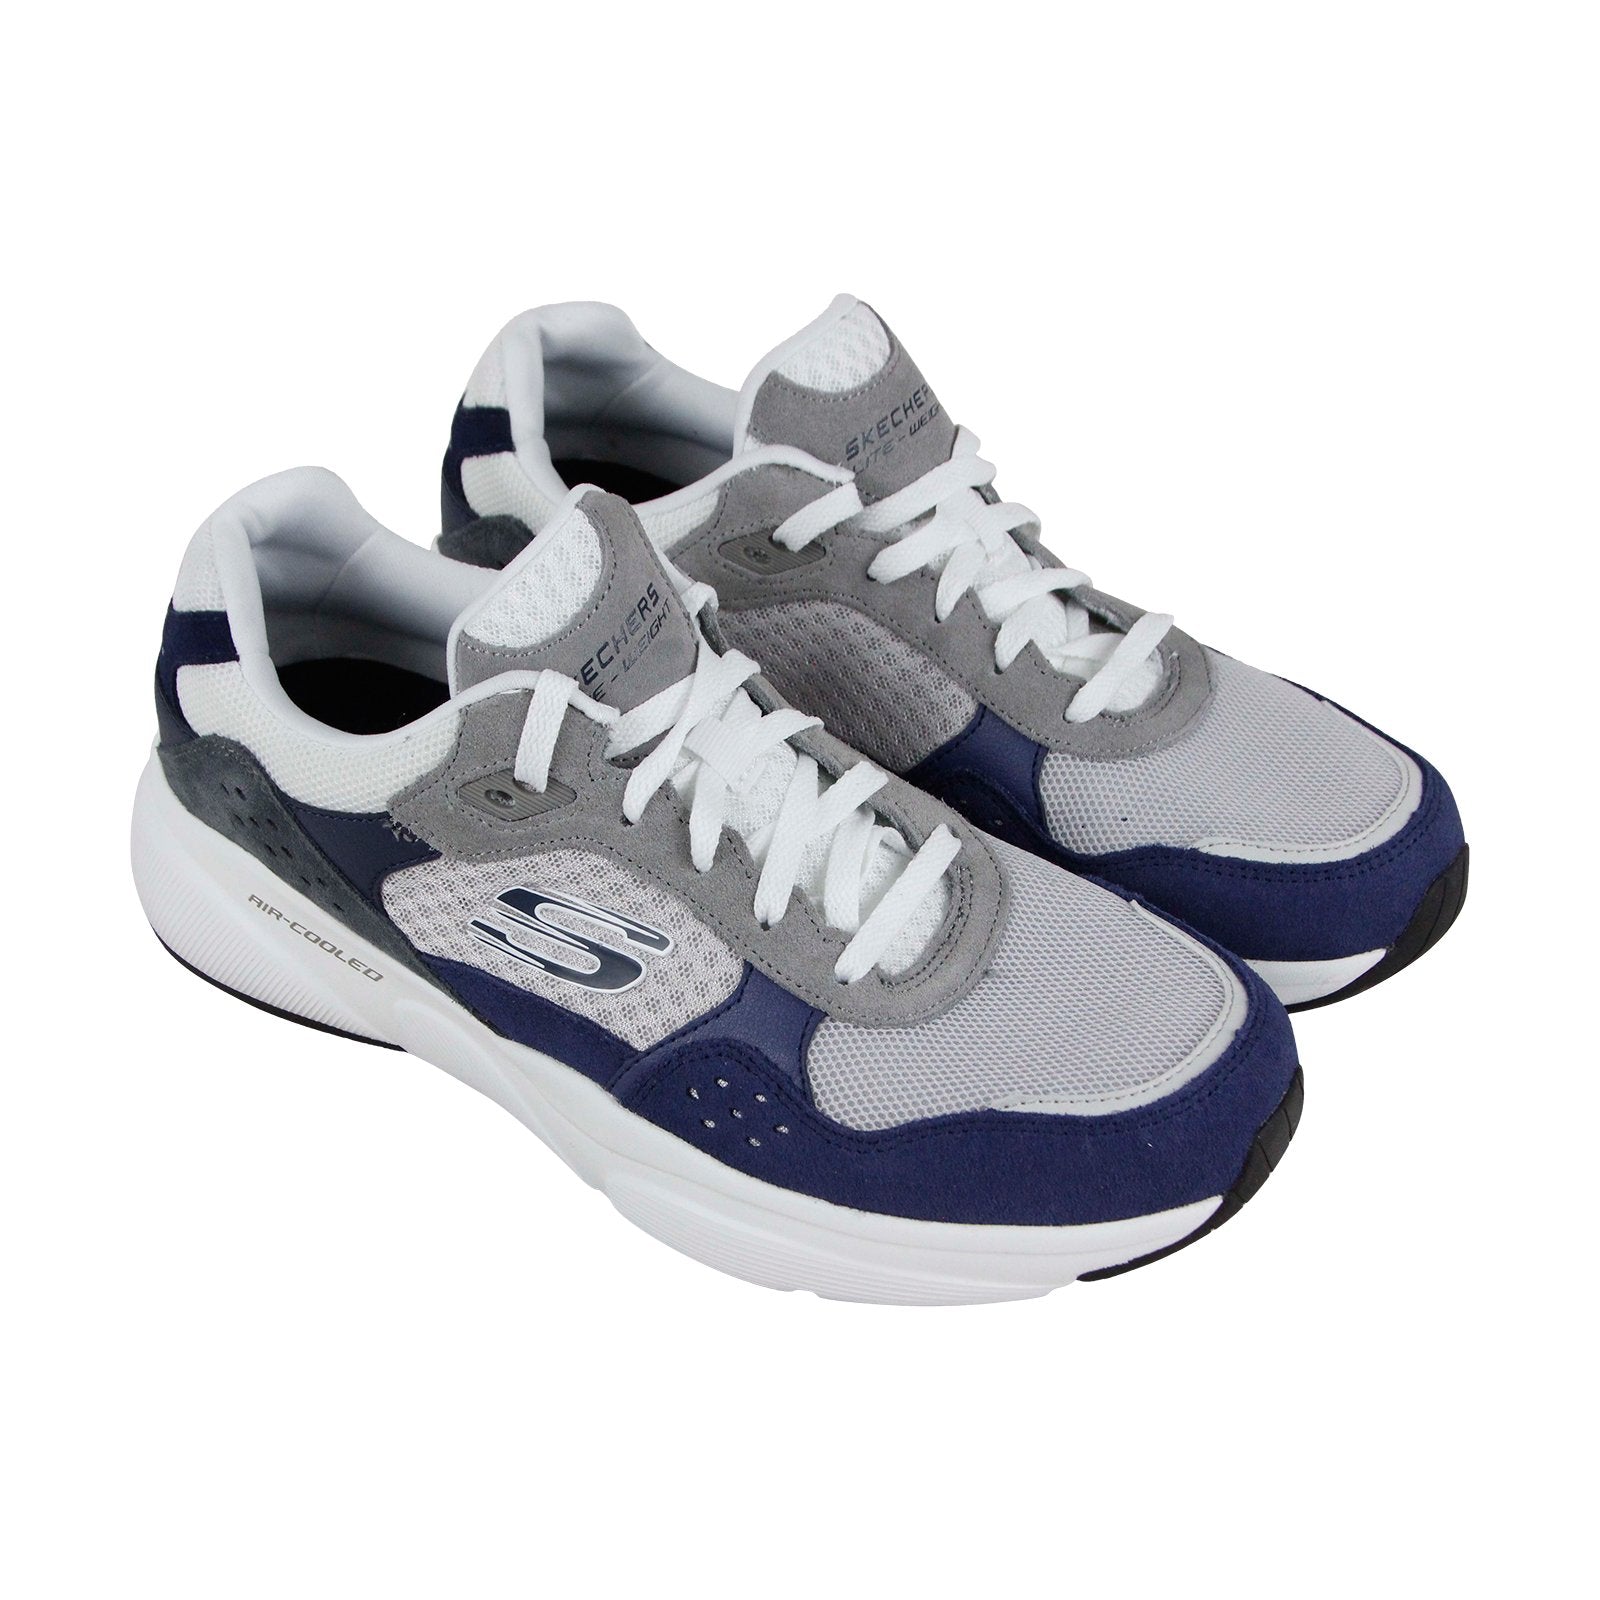 Amigo abdomen Exclusivo Skechers Meridian Ostwall 52952 Mens Gray Suede Lace Up Lifestyle Snea -  Ruze Shoes